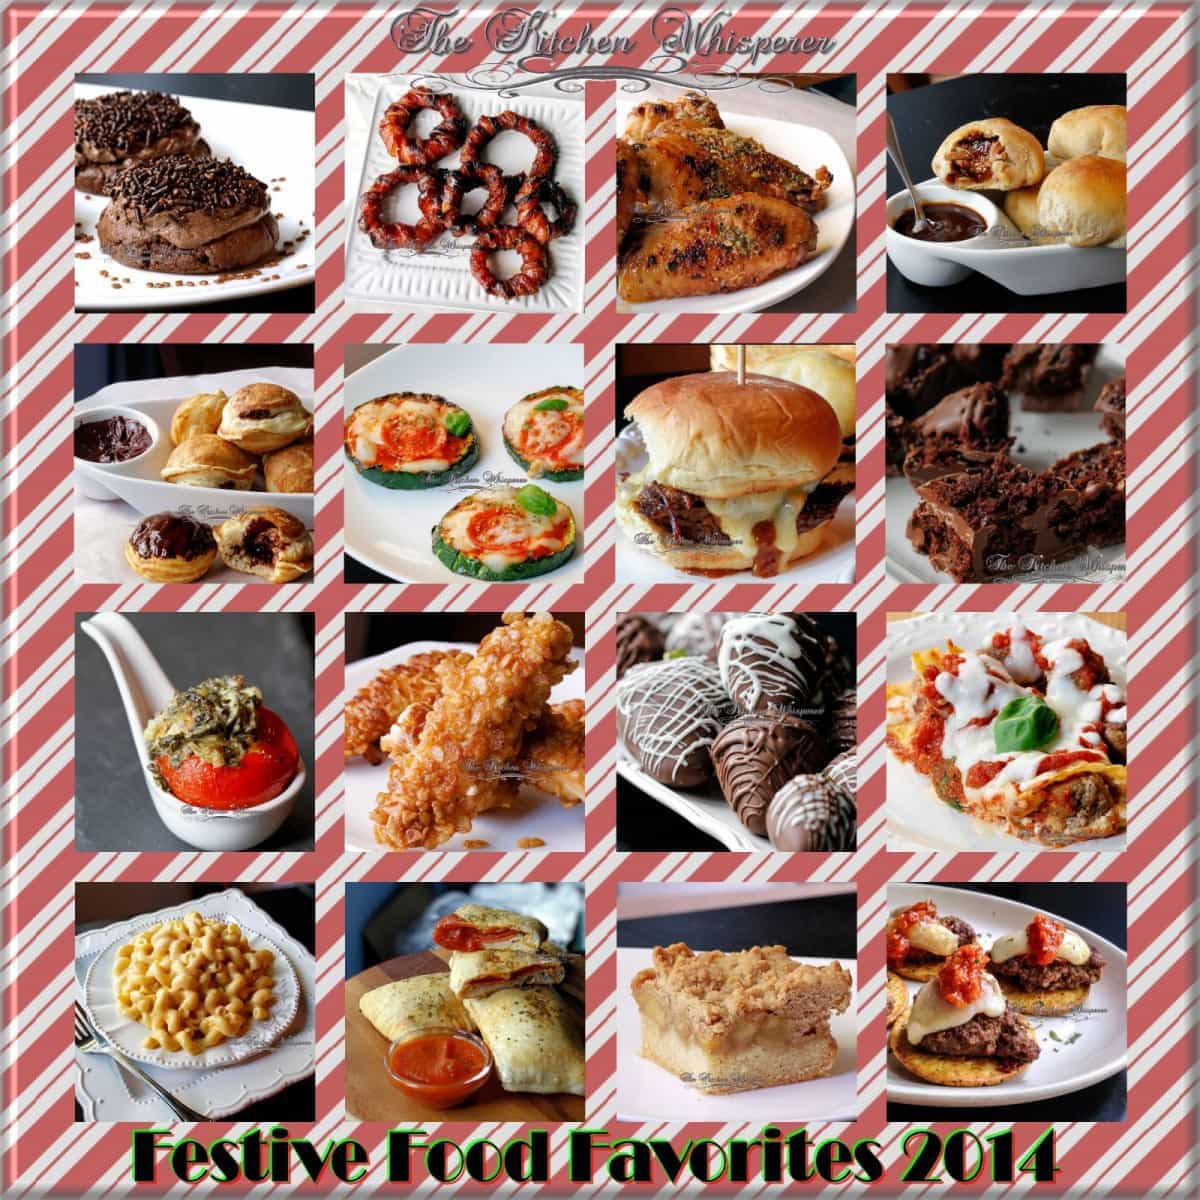 festive food favorites 2014